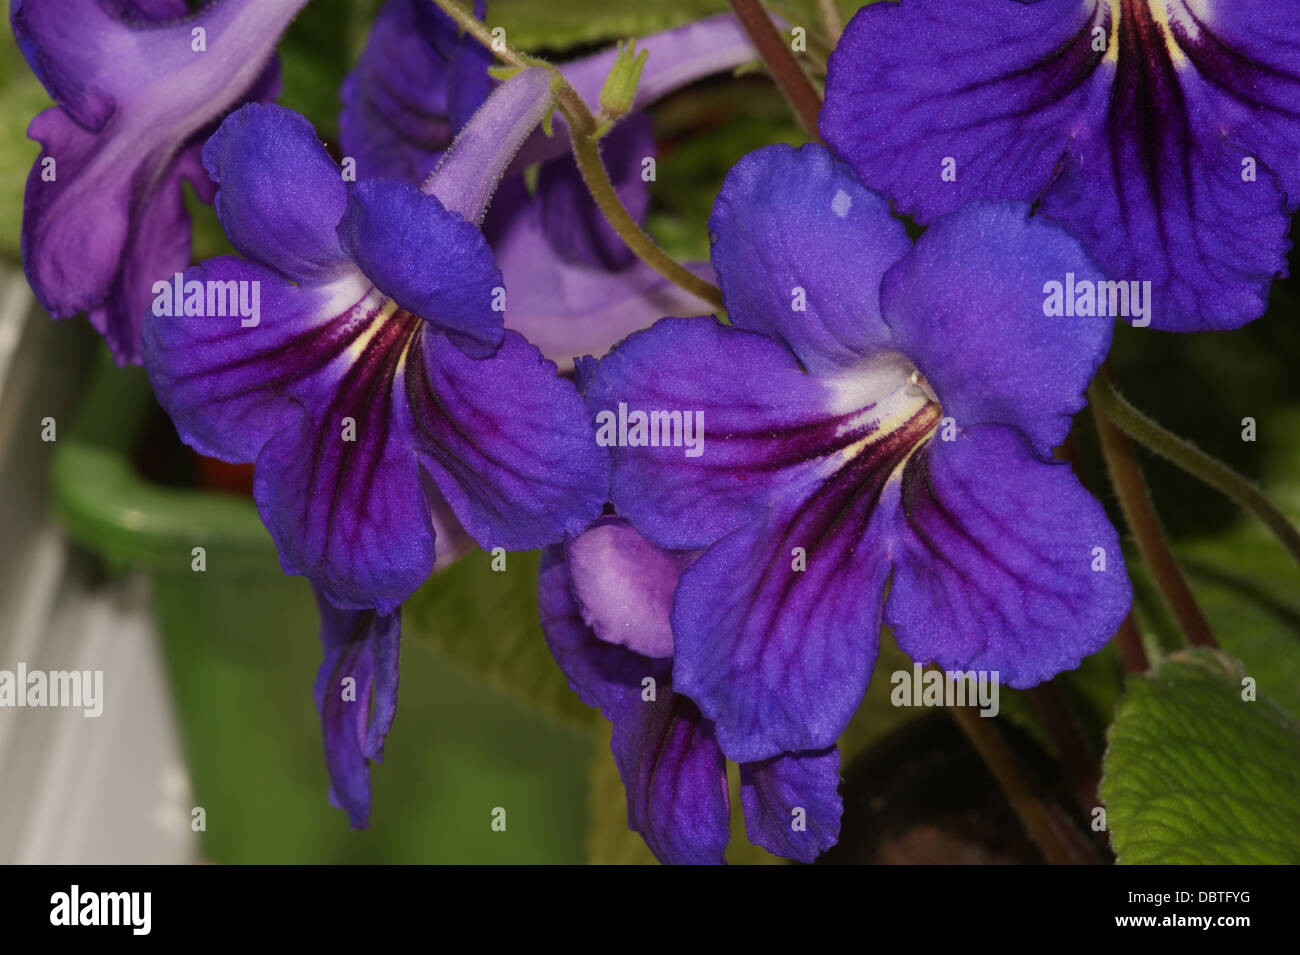 Streptocarpus 'Amanda' Stock Photo